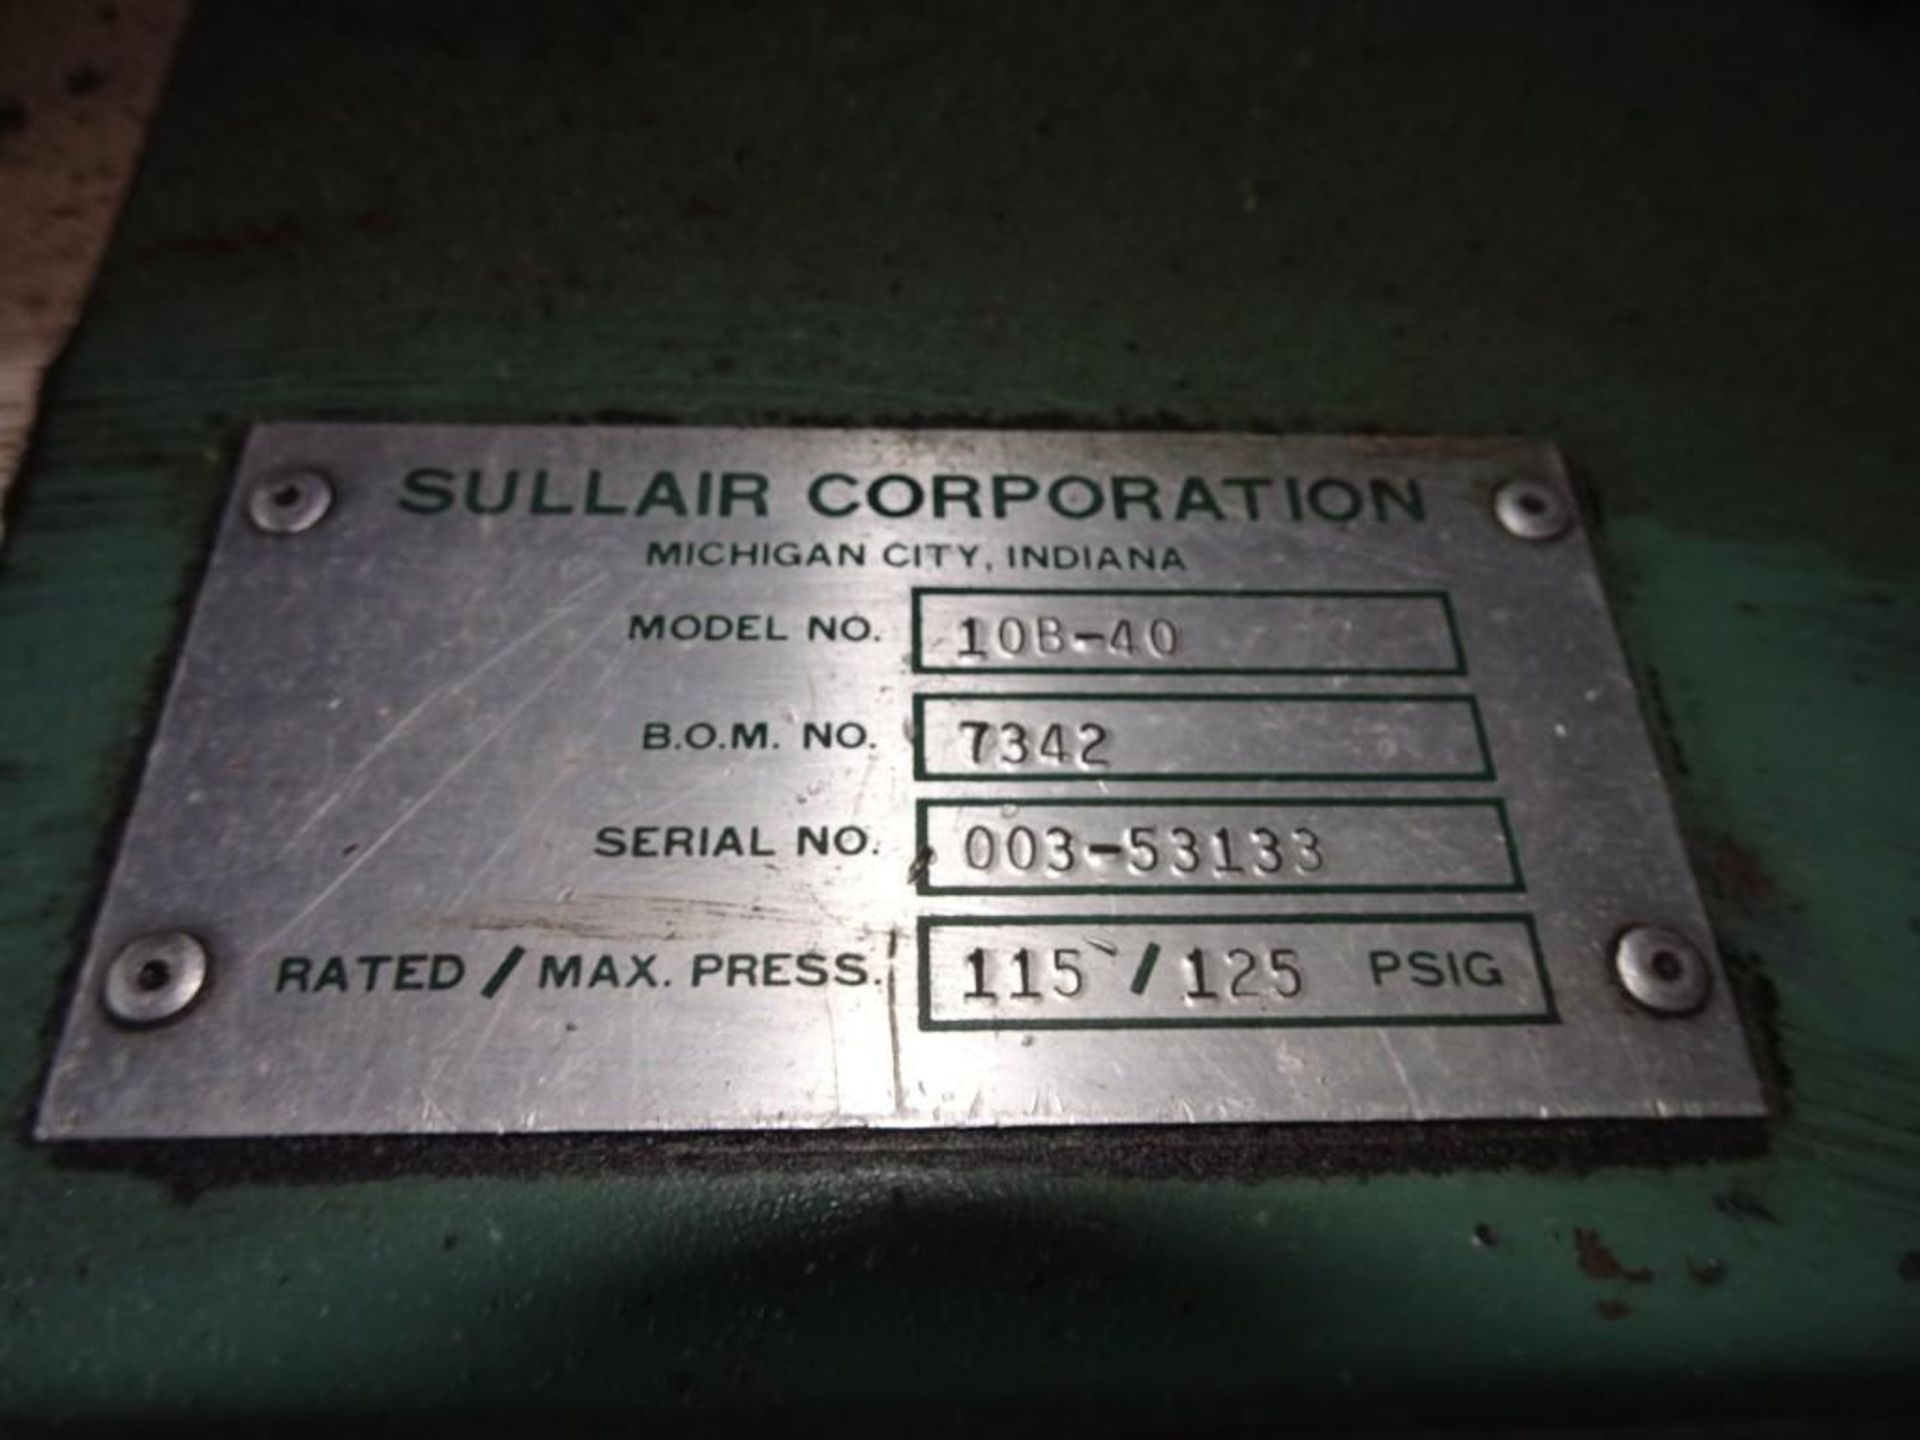 Sullair 10B-40 Air Compressor 115/125 PSIG - Image 2 of 3